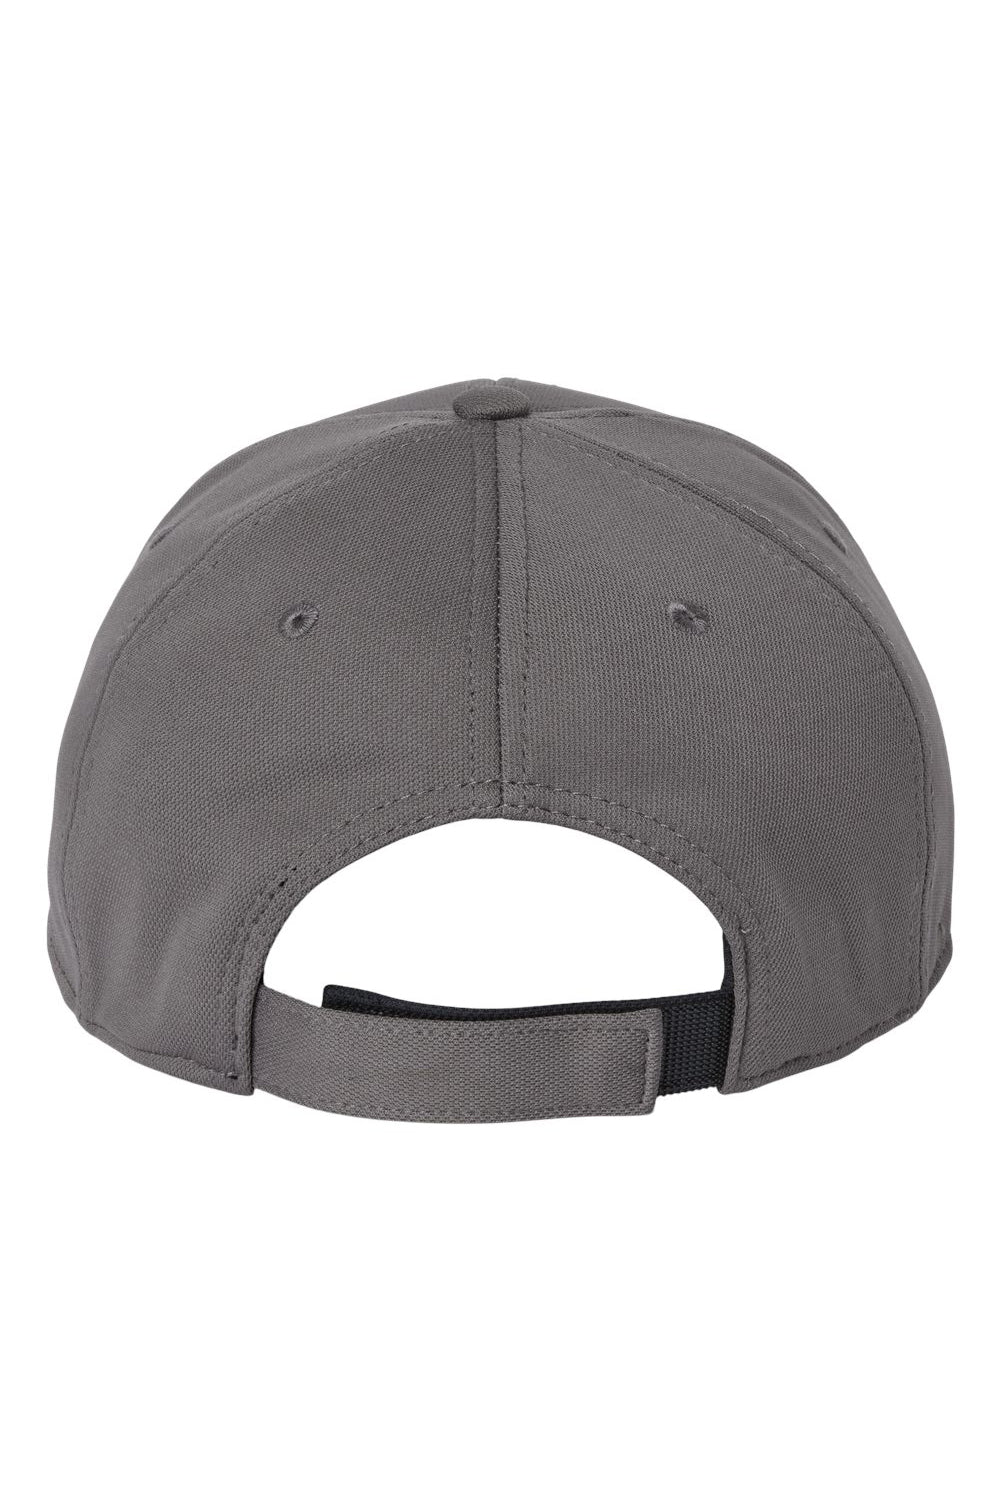 Atlantis Headwear SKYE Mens Sustainable Honeycomb Adjustable Hat Dark Grey Flat Back